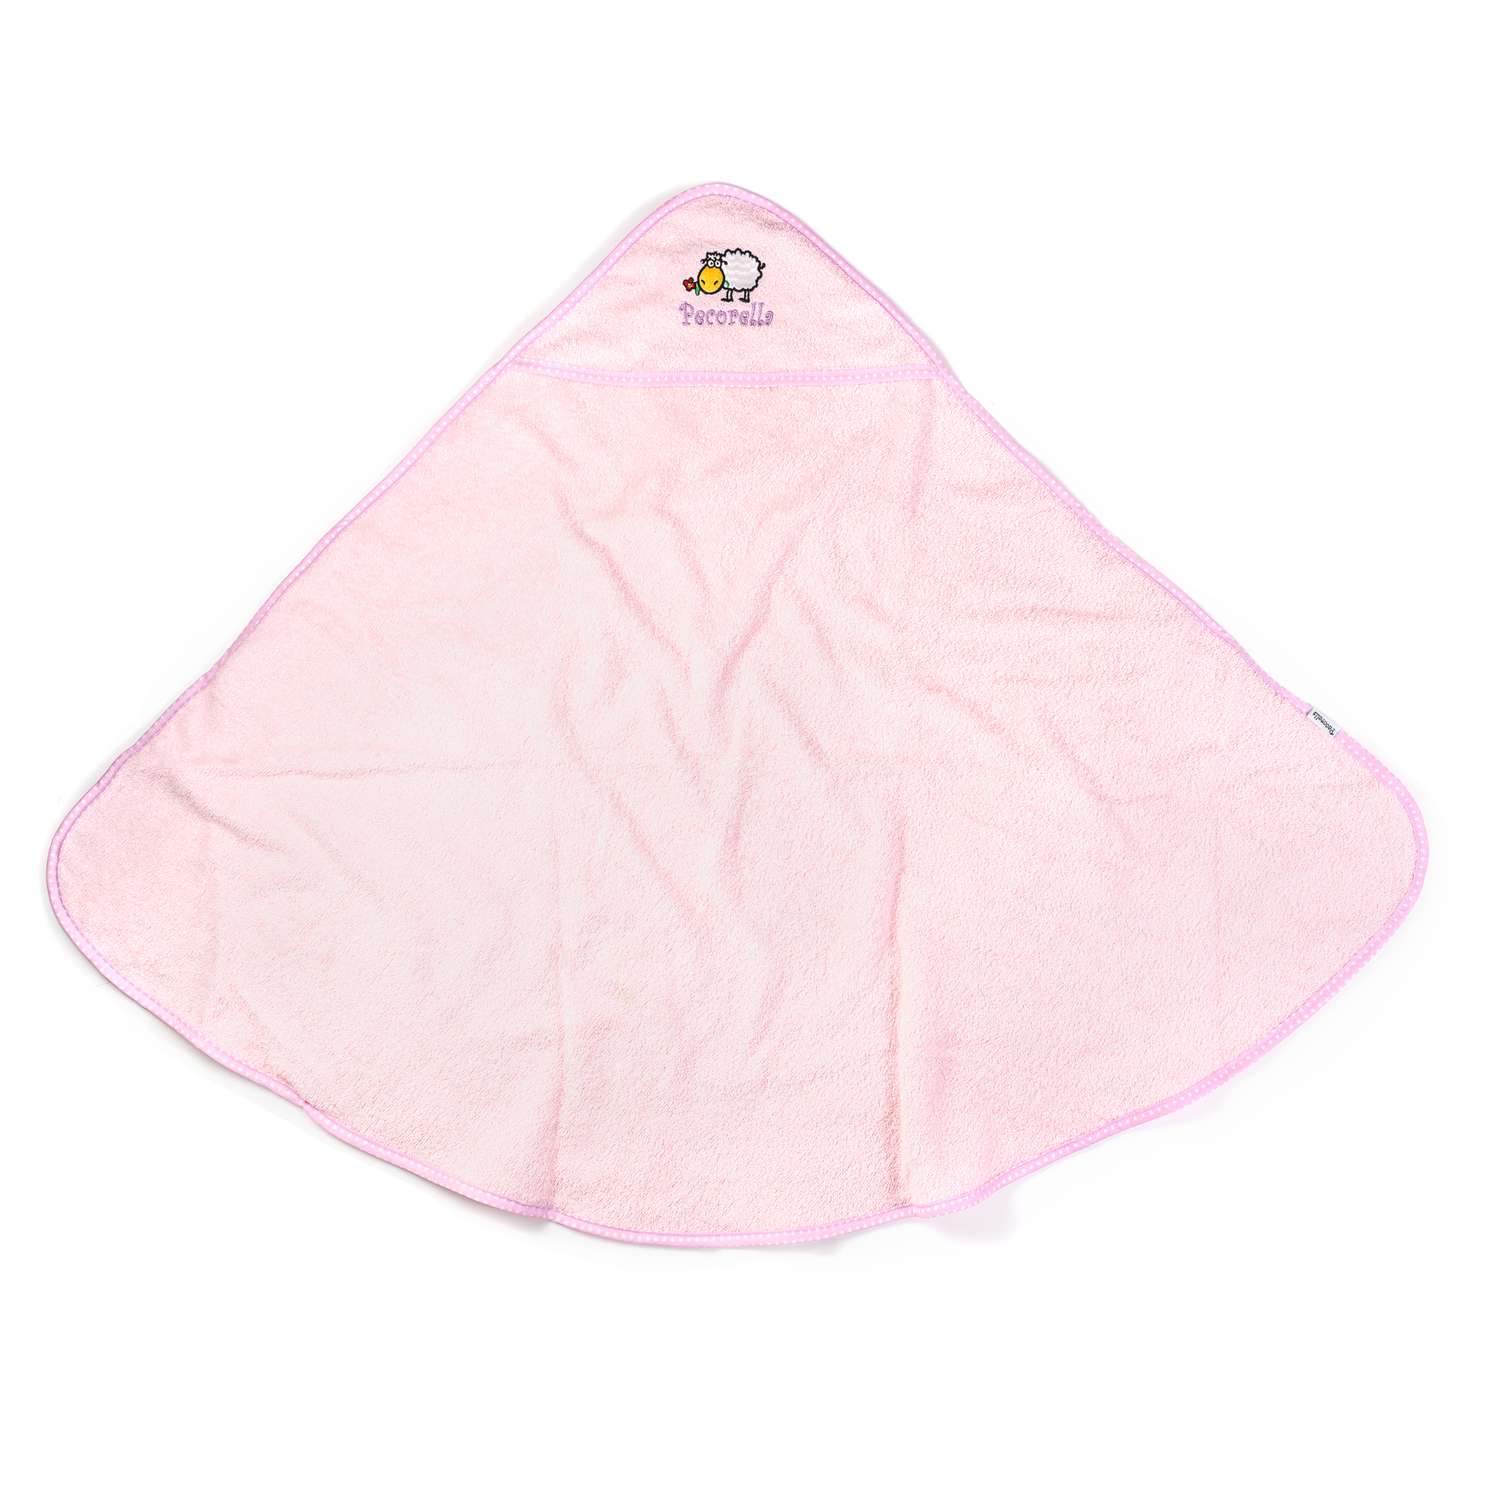 Полотенце с капюшоном Pecorella Розовое - фото 12